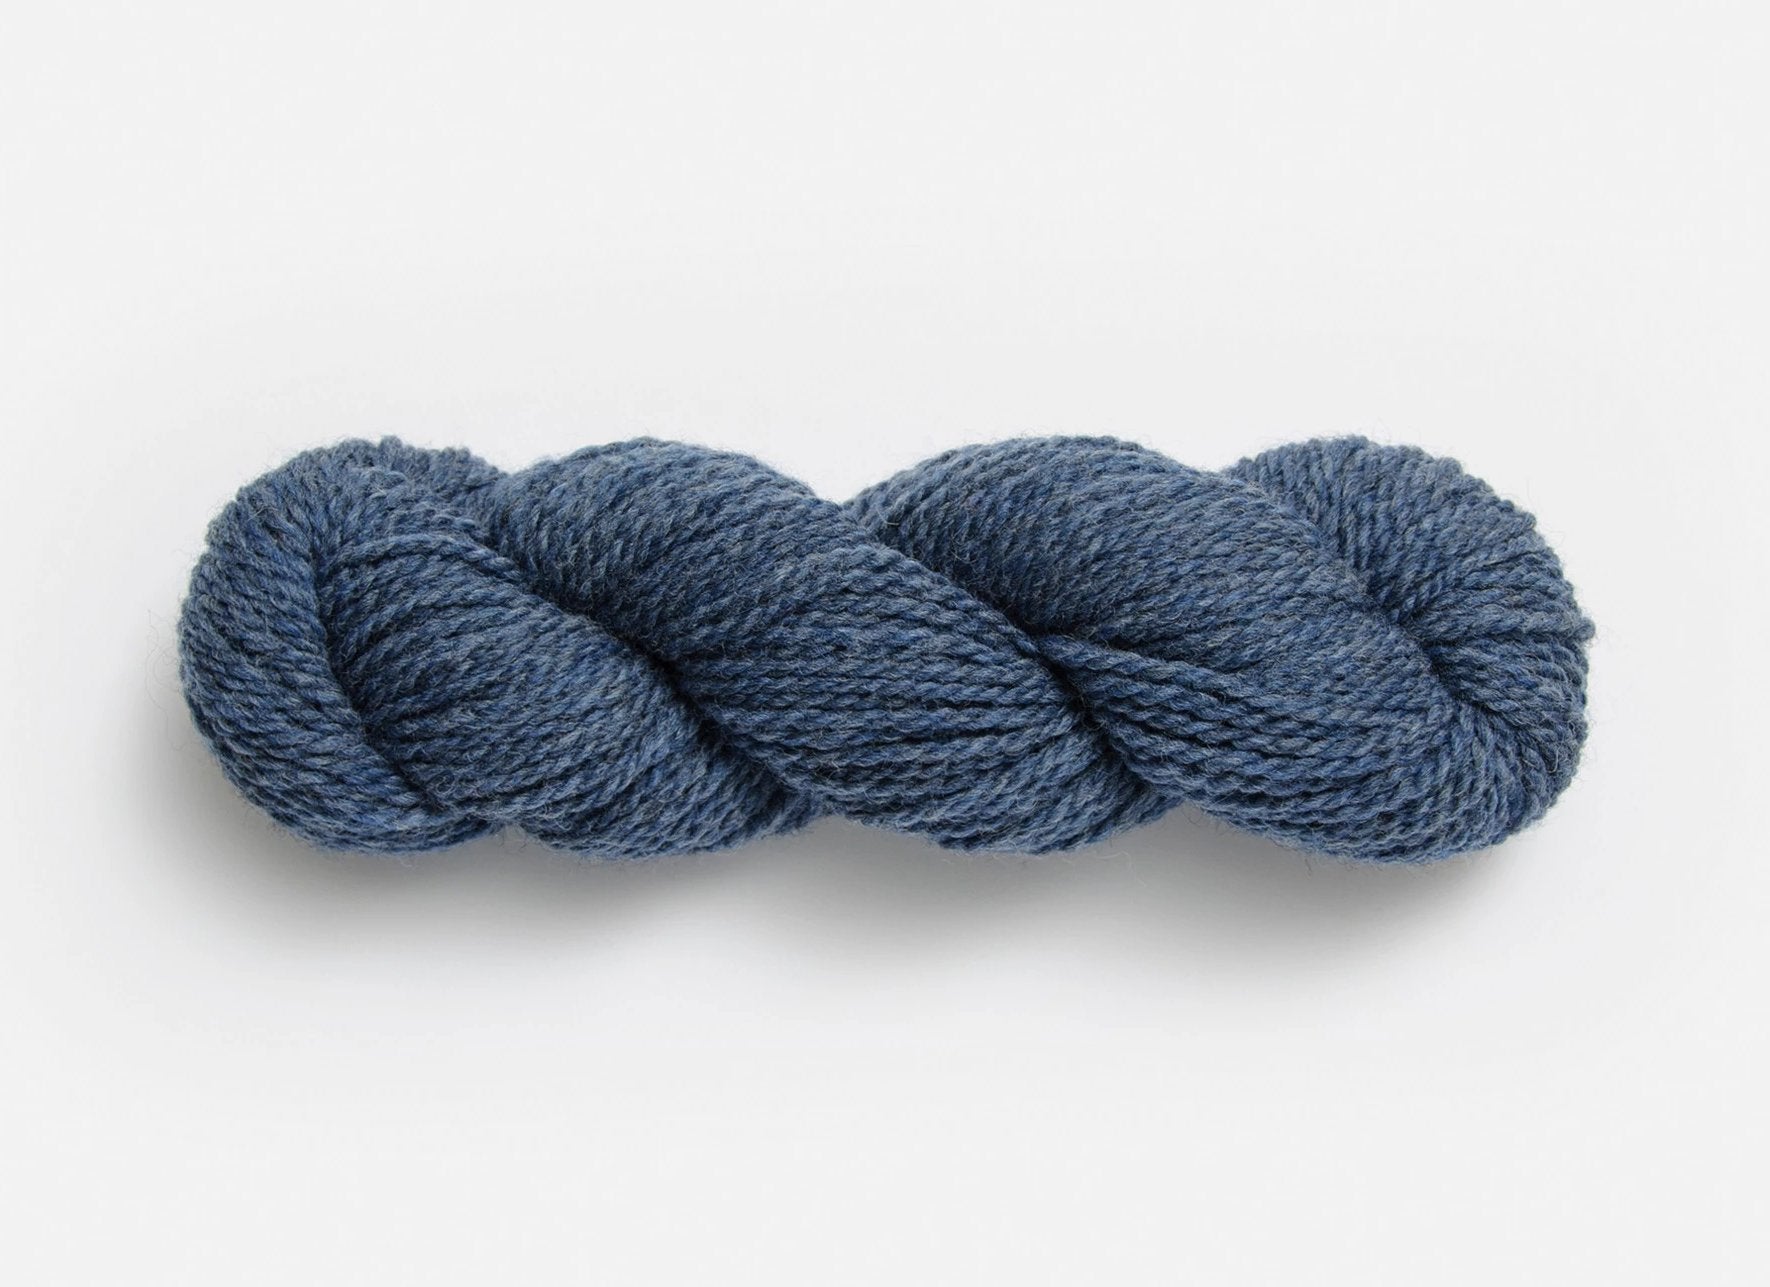 Blue Sky Fibers Woolstok Bundle Kits at Fabulous Yarn